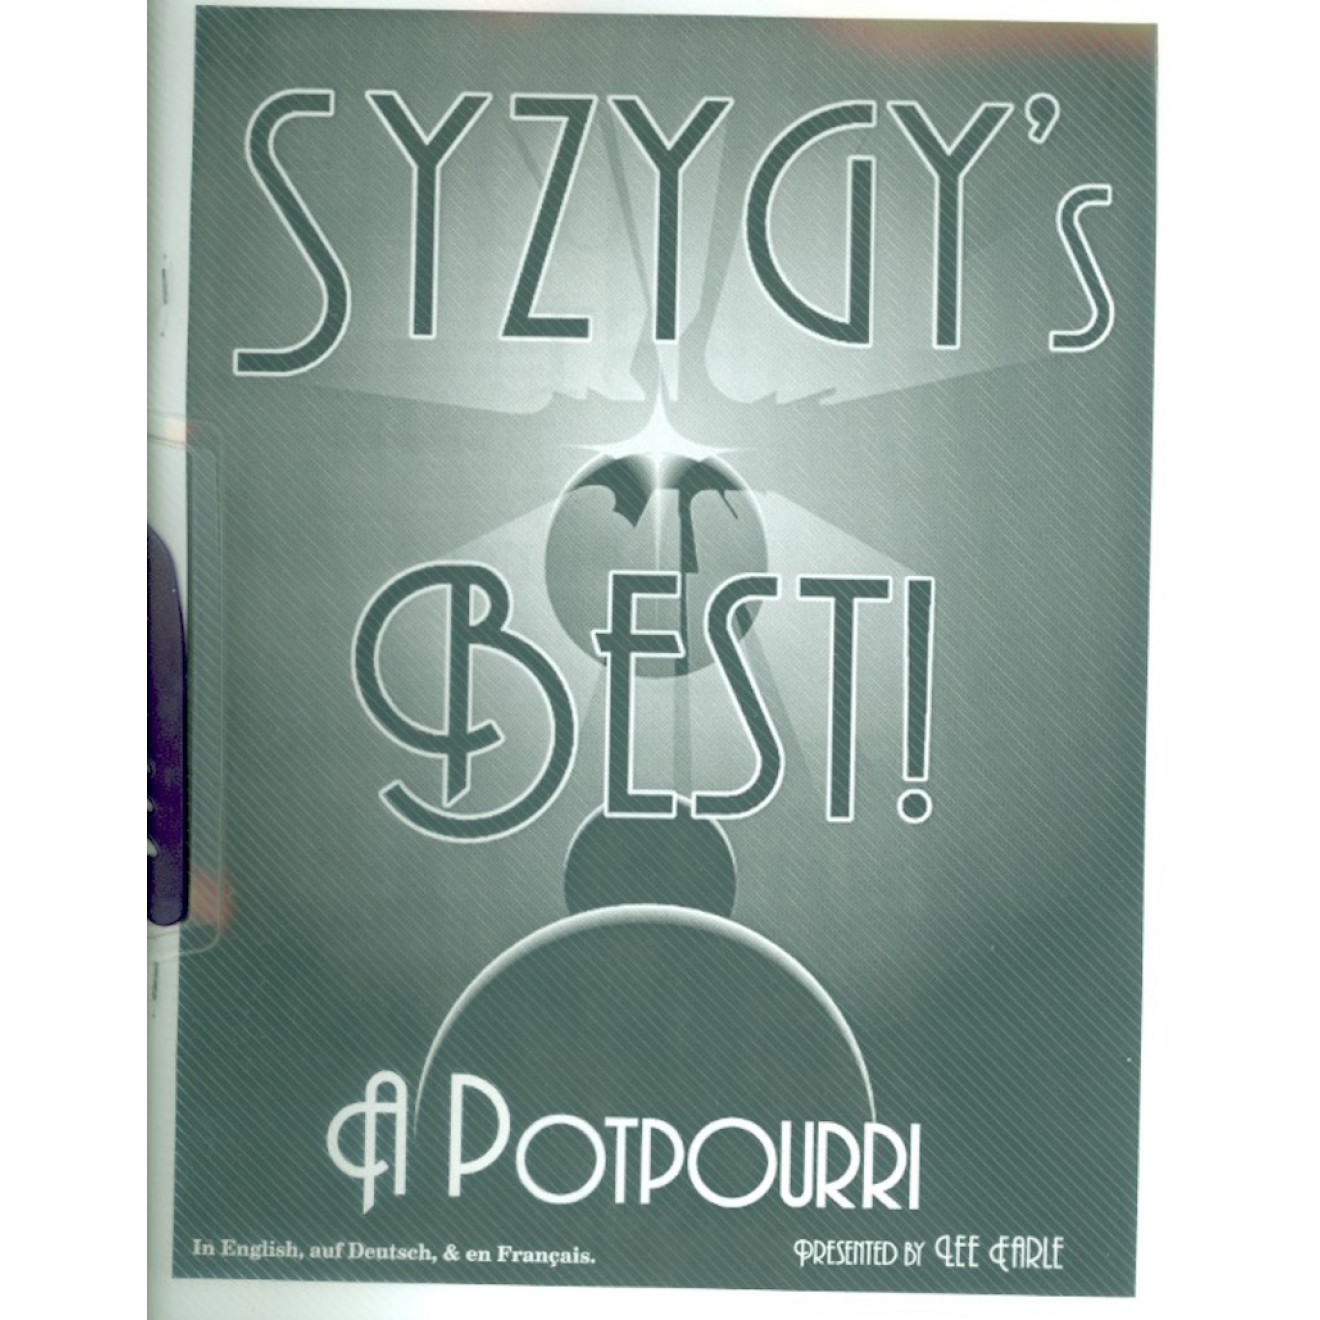 Syzygy's Best & Potpourri